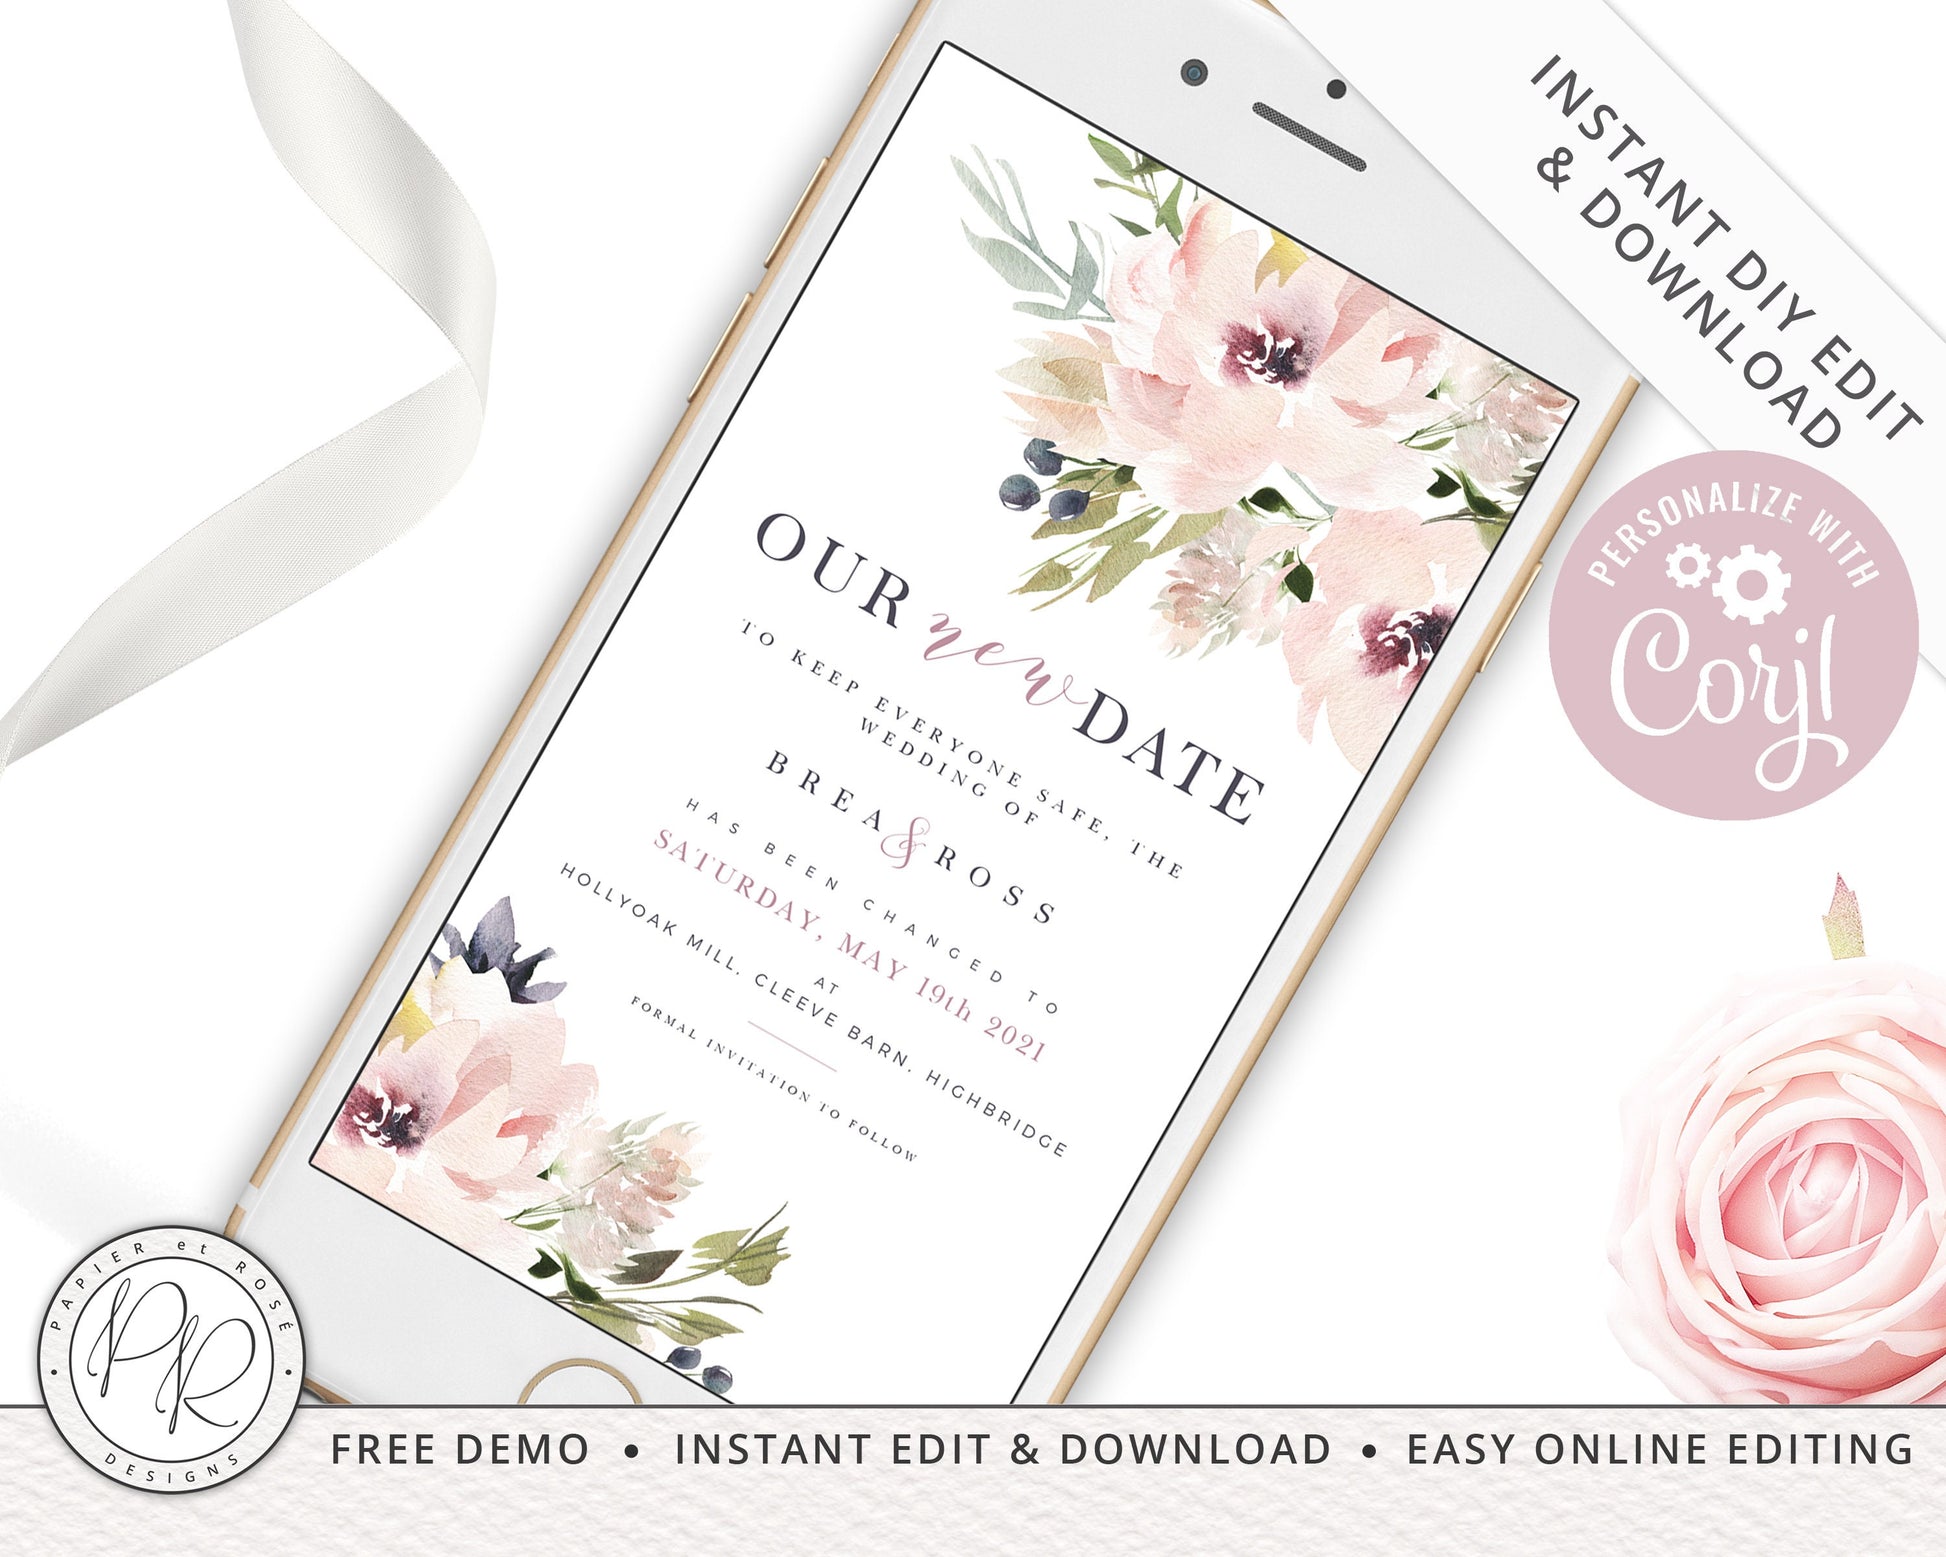 DIY Instant New Date Elegant Modern Floral Phone E-message Change of Plans Change Wedding Postponed Announcement Editable Template - PRD014